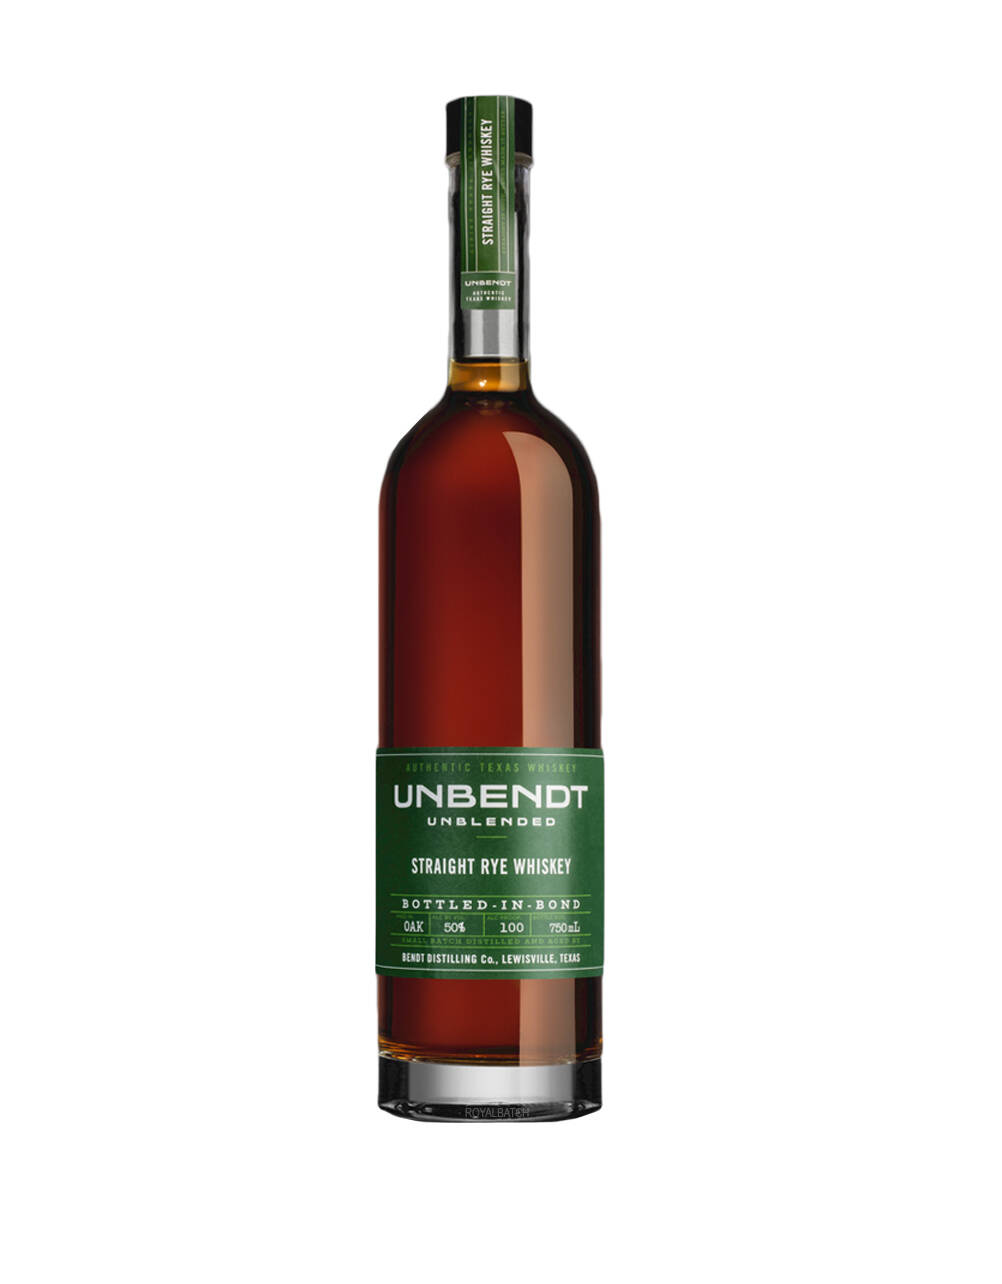 Unbendt Unblended Straight Rye Whiskey